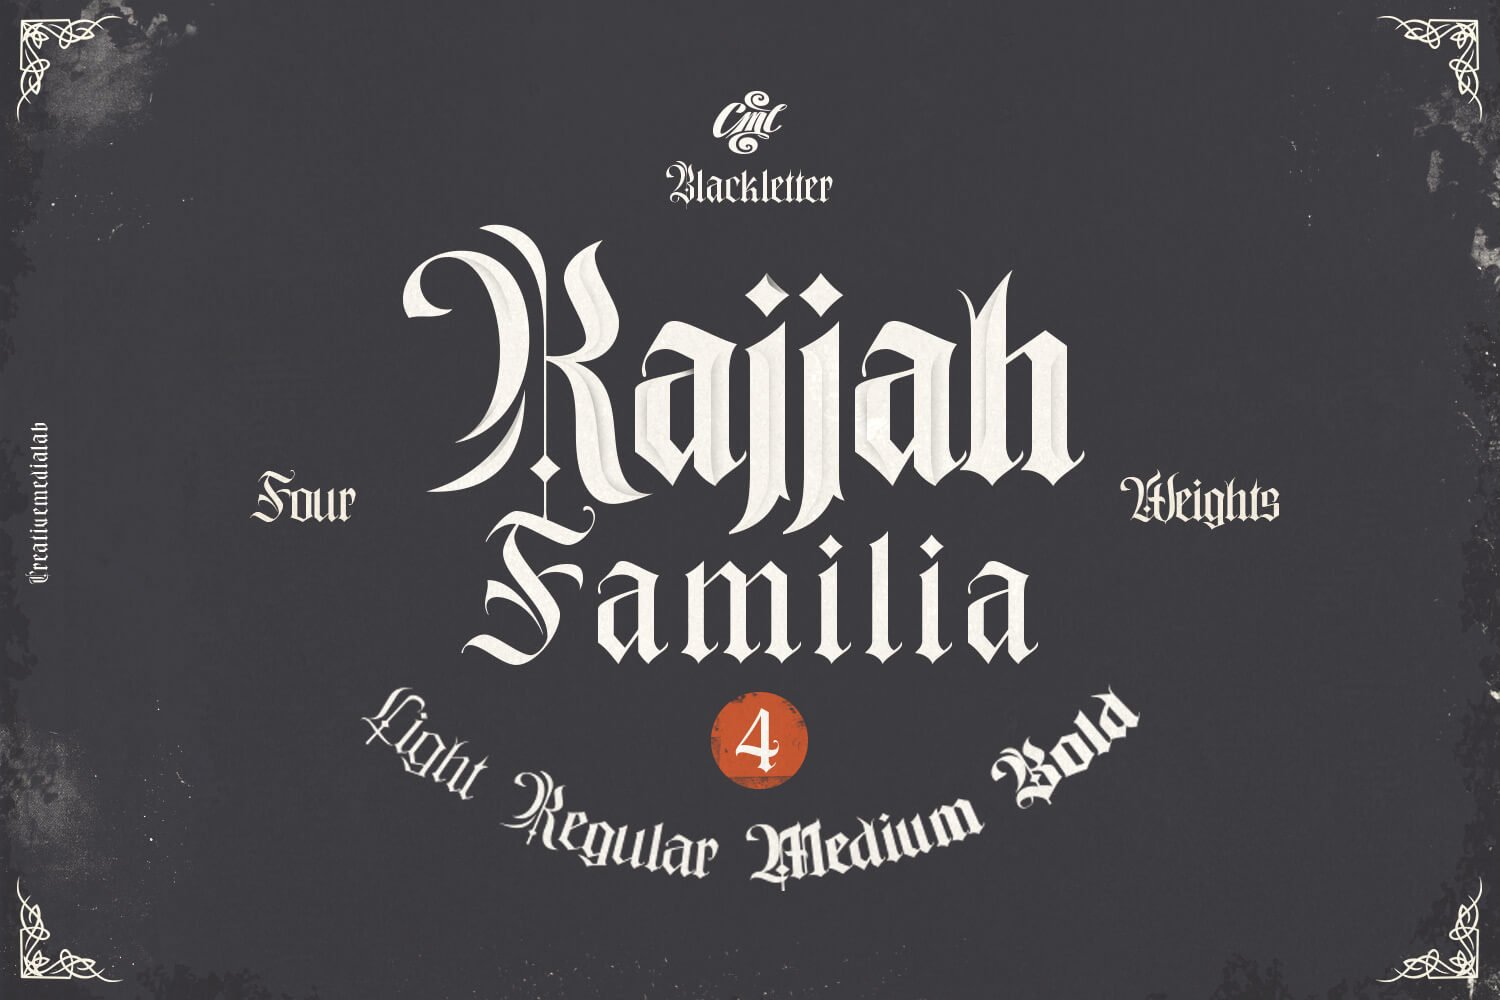 Rajjah Familia - Blackletter family cover image.